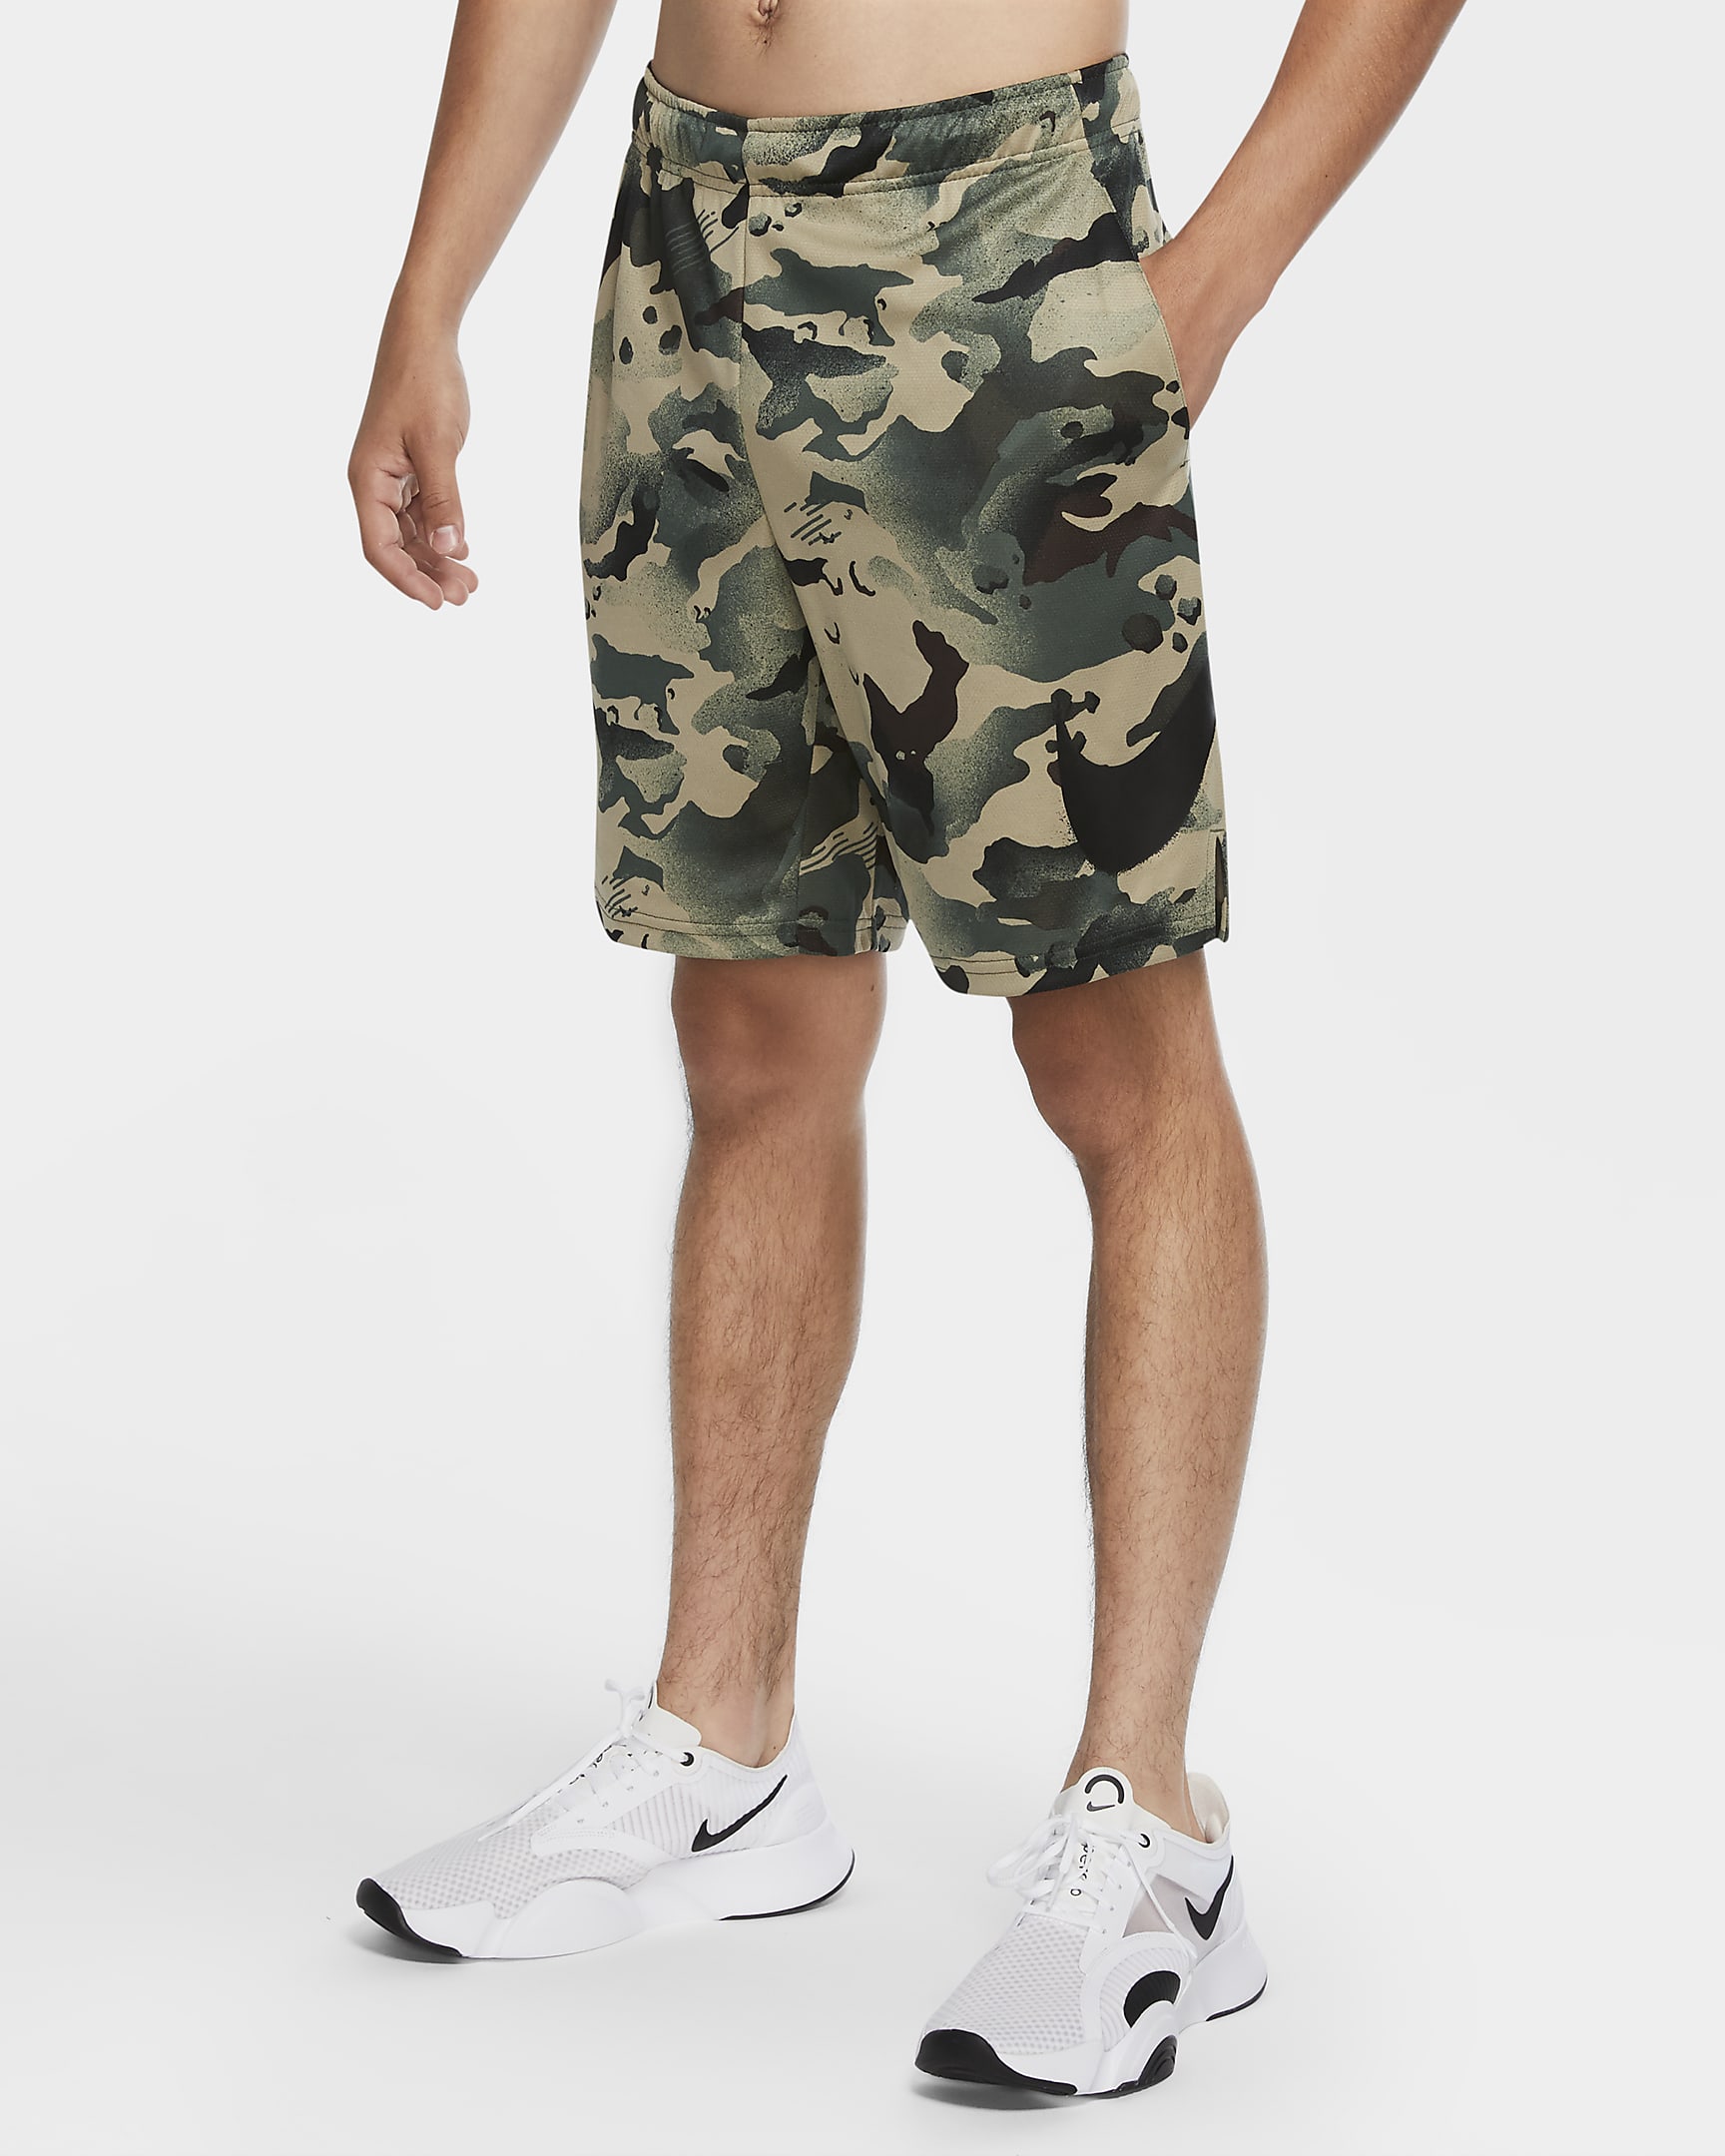 Nike Dri-FIT Men's Camo Training Shorts - Sequoia/Black